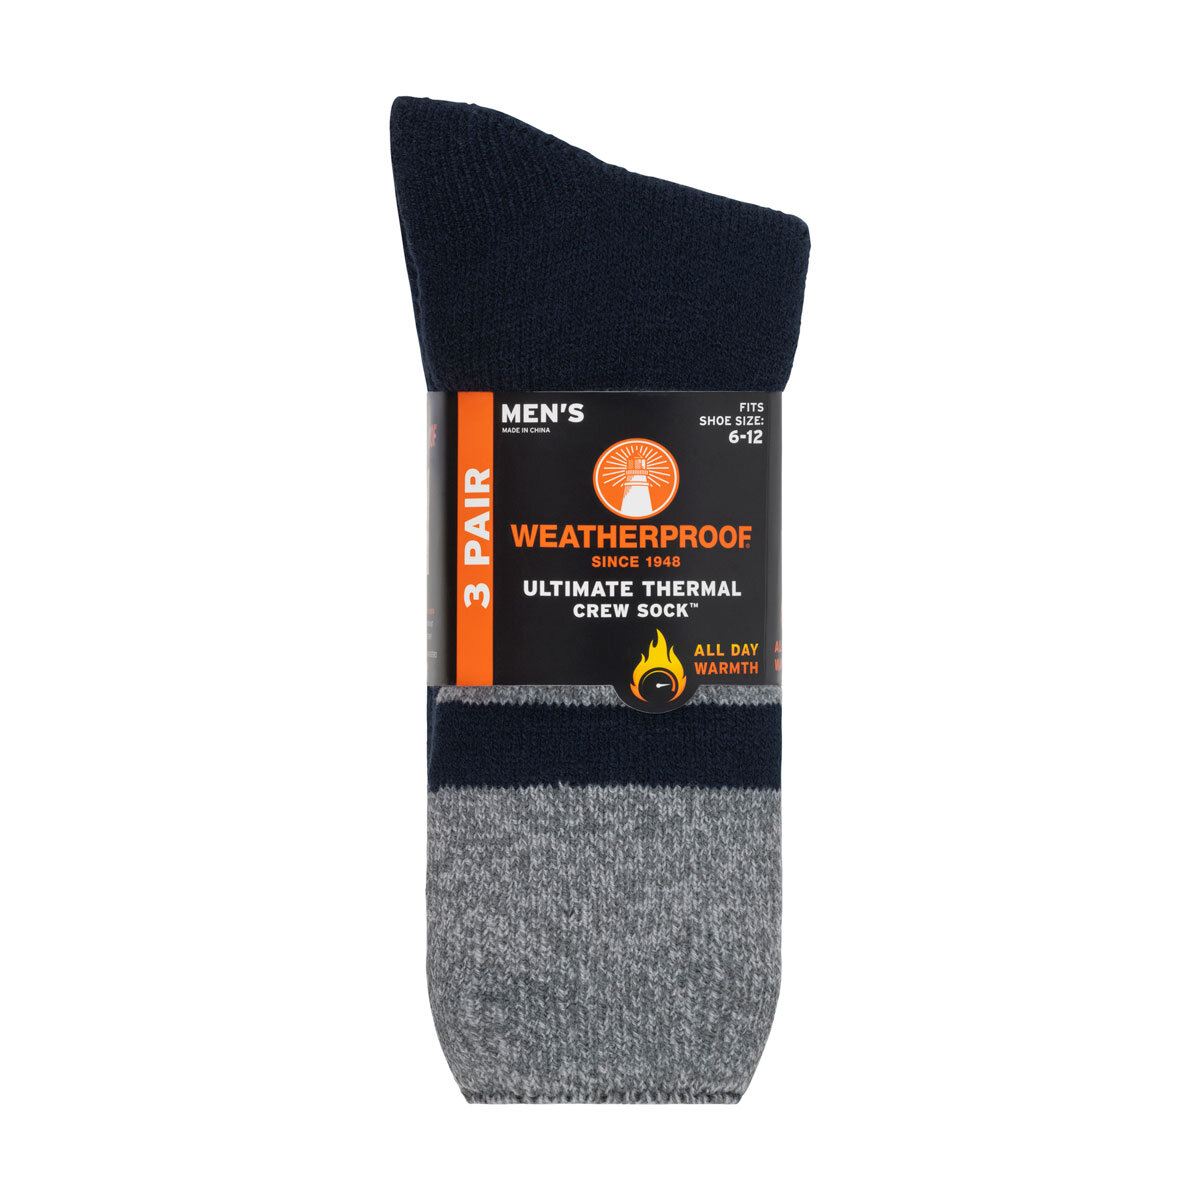 Weatherproof Men's Thermal Crew Socks, 3 Pack in Assorted Colours